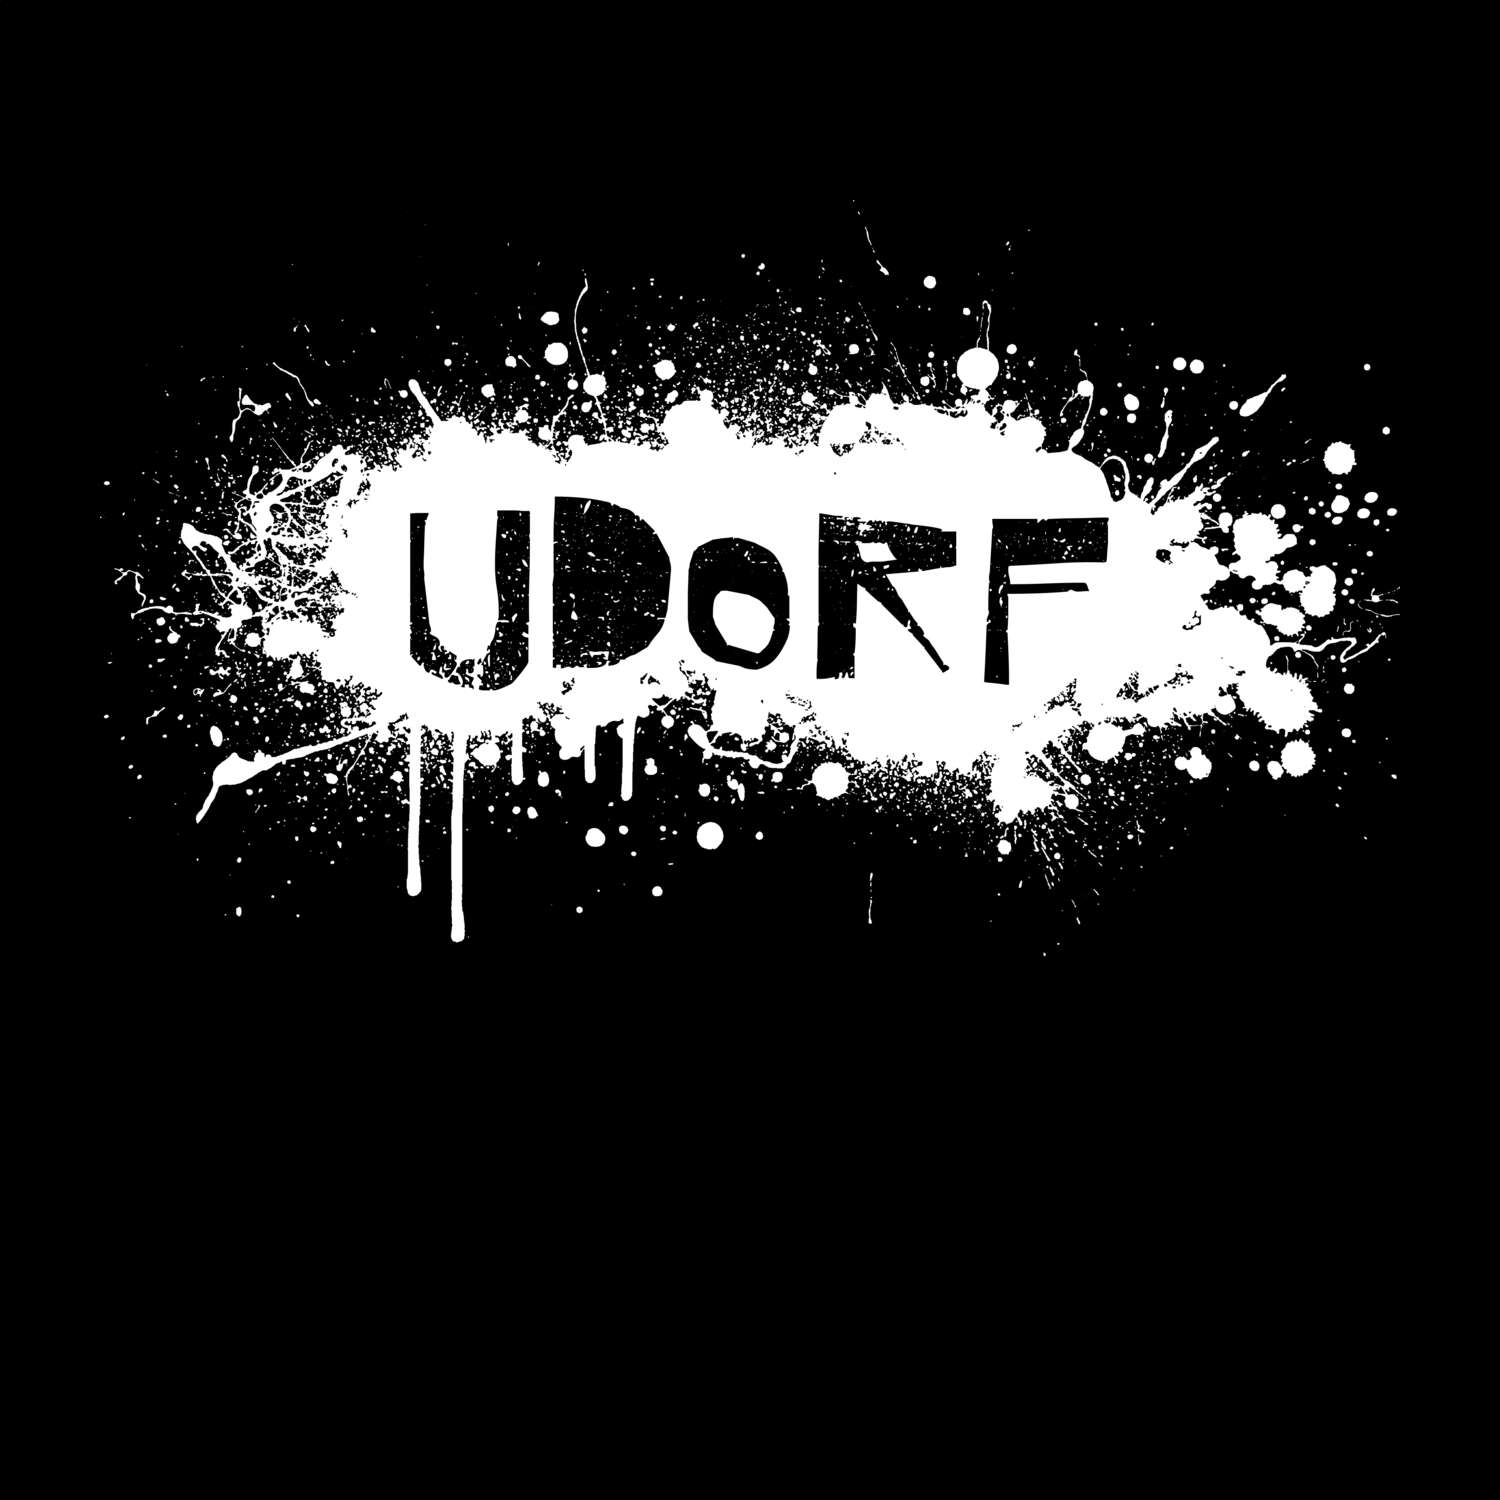 Udorf T-Shirt »Paint Splash Punk«